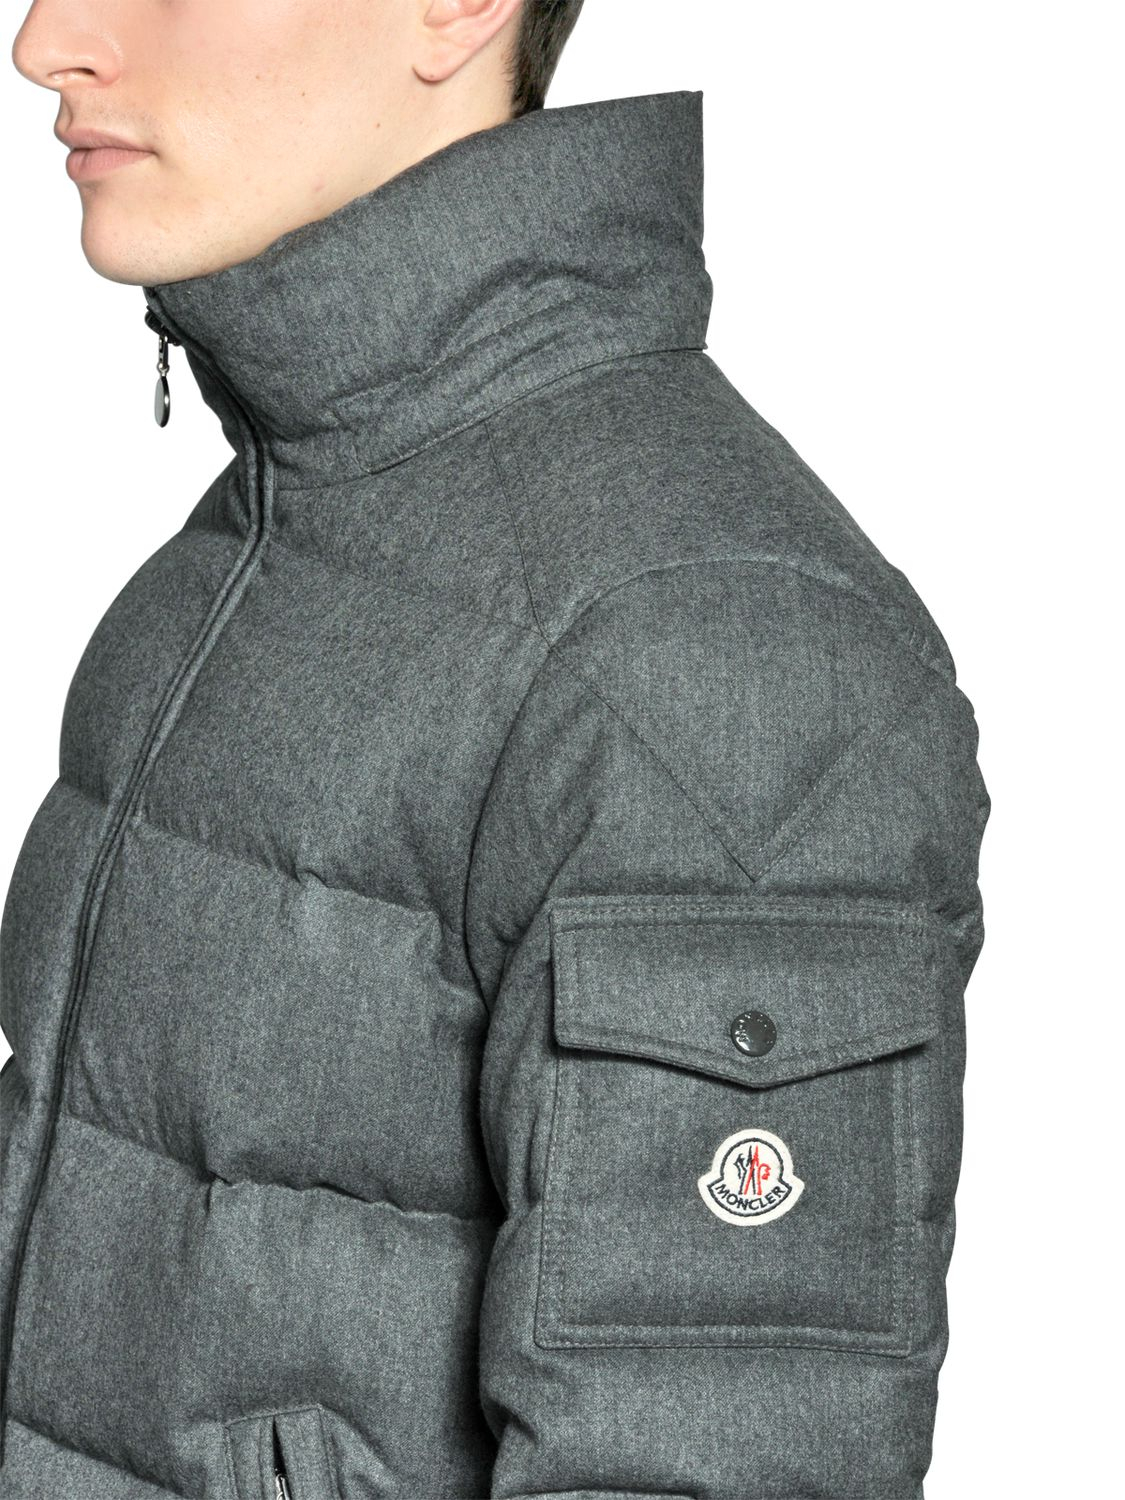 Moncler Montgenevre Light Flannel Down Jacket in Grey (Gray) for Men - Lyst